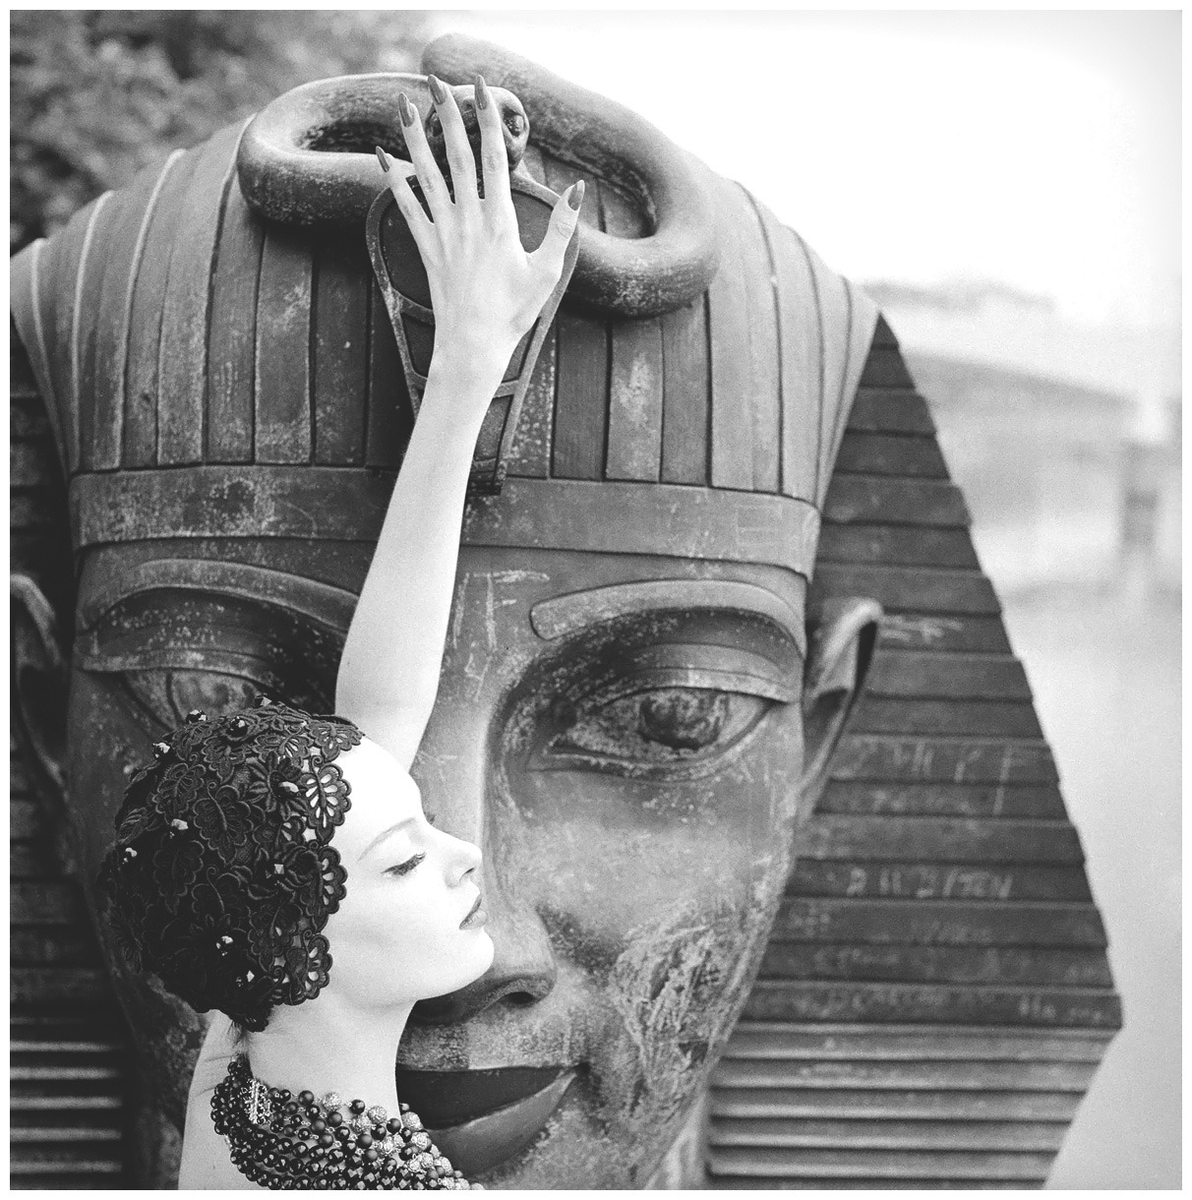 Nena and The Sphinx, 1963

Norman Parkinson

#NenaAndTheSphinx #NormanParkinson #FashionPhotography #1960sStyle #VintageFashion